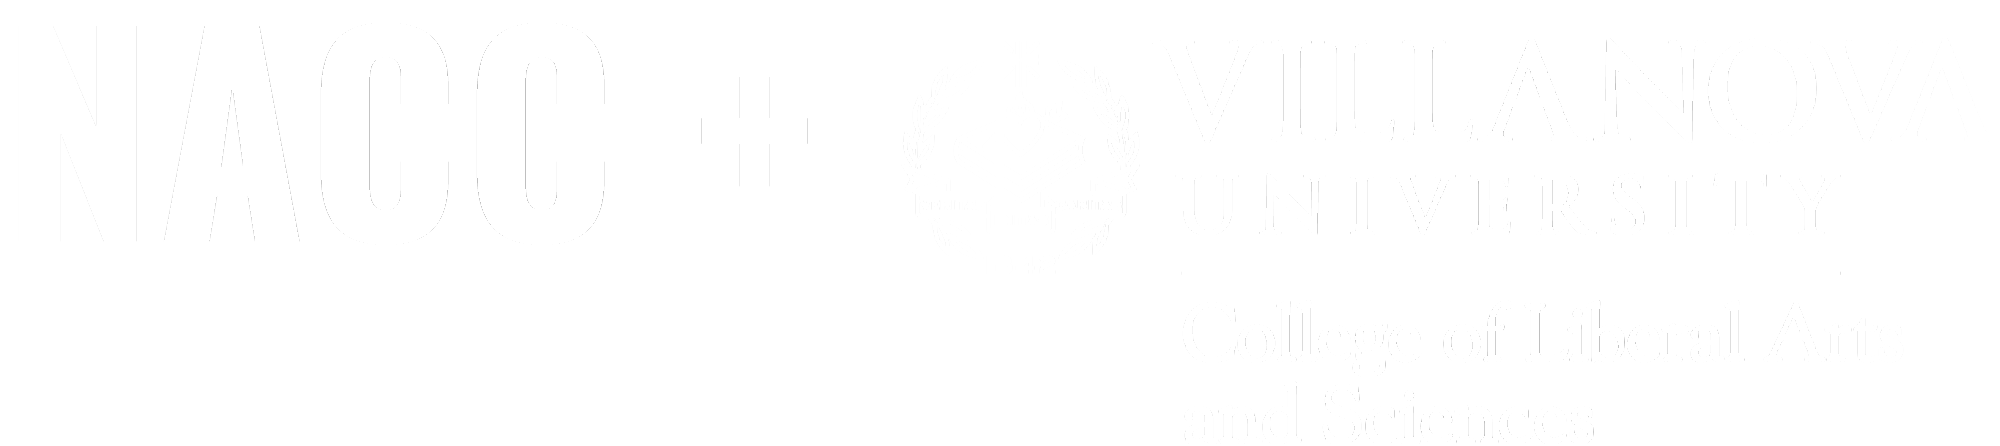 NACC and Villanova University logos